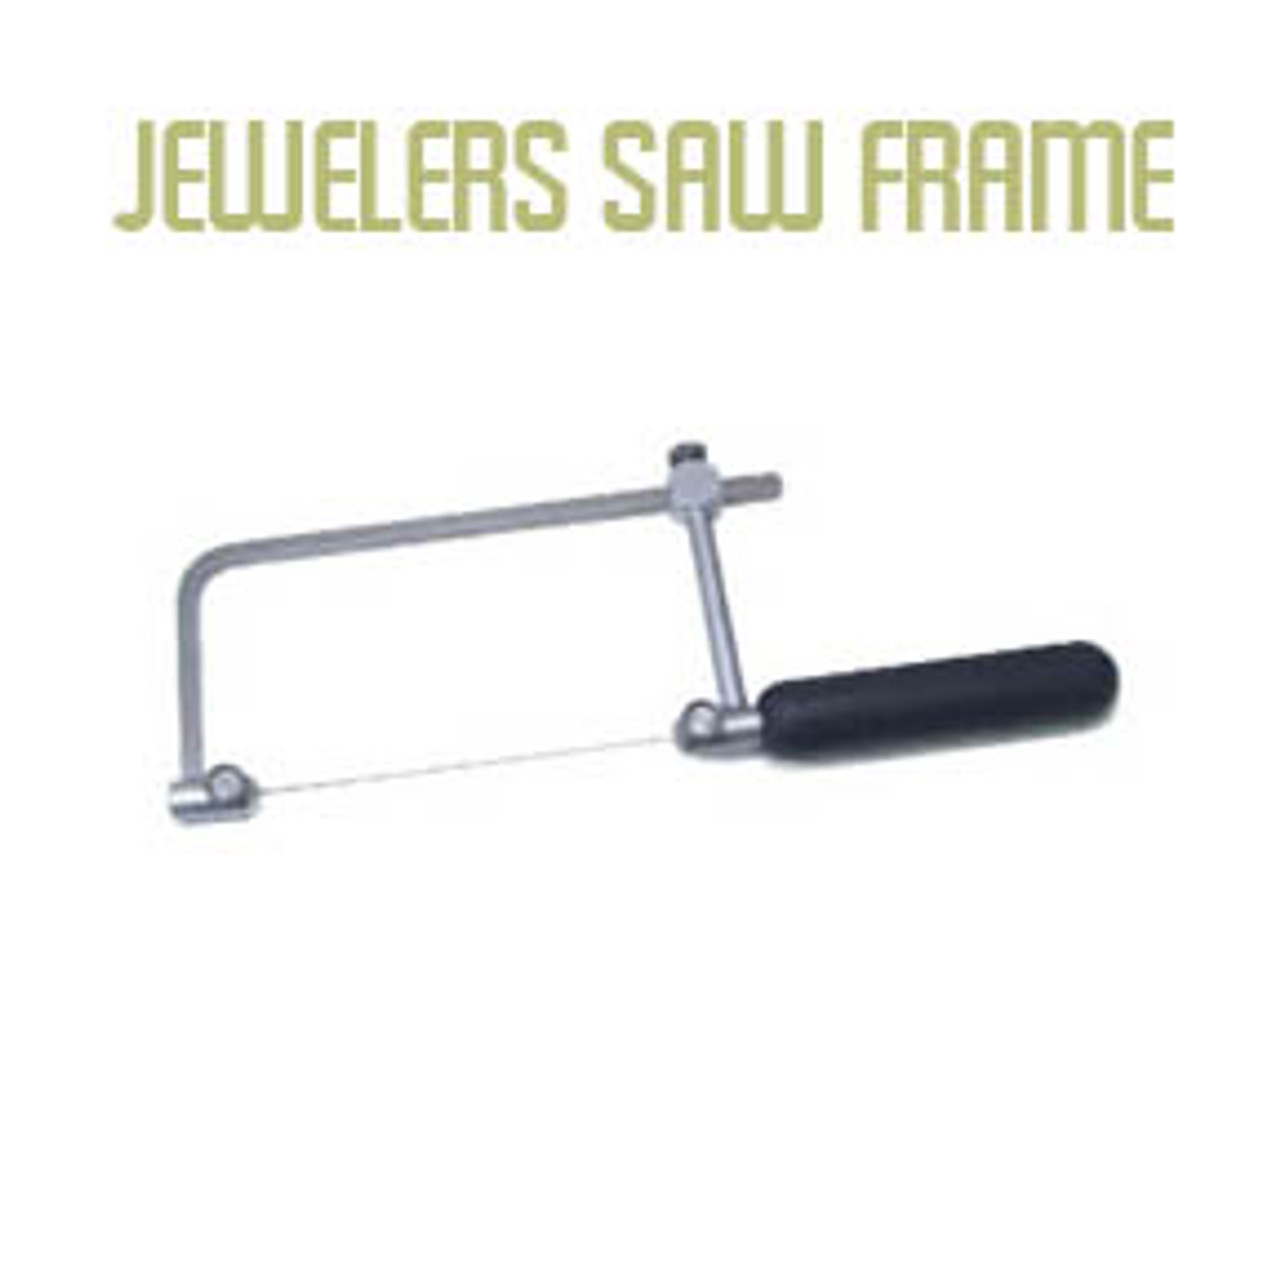 Jewelers Saw Frame Kit